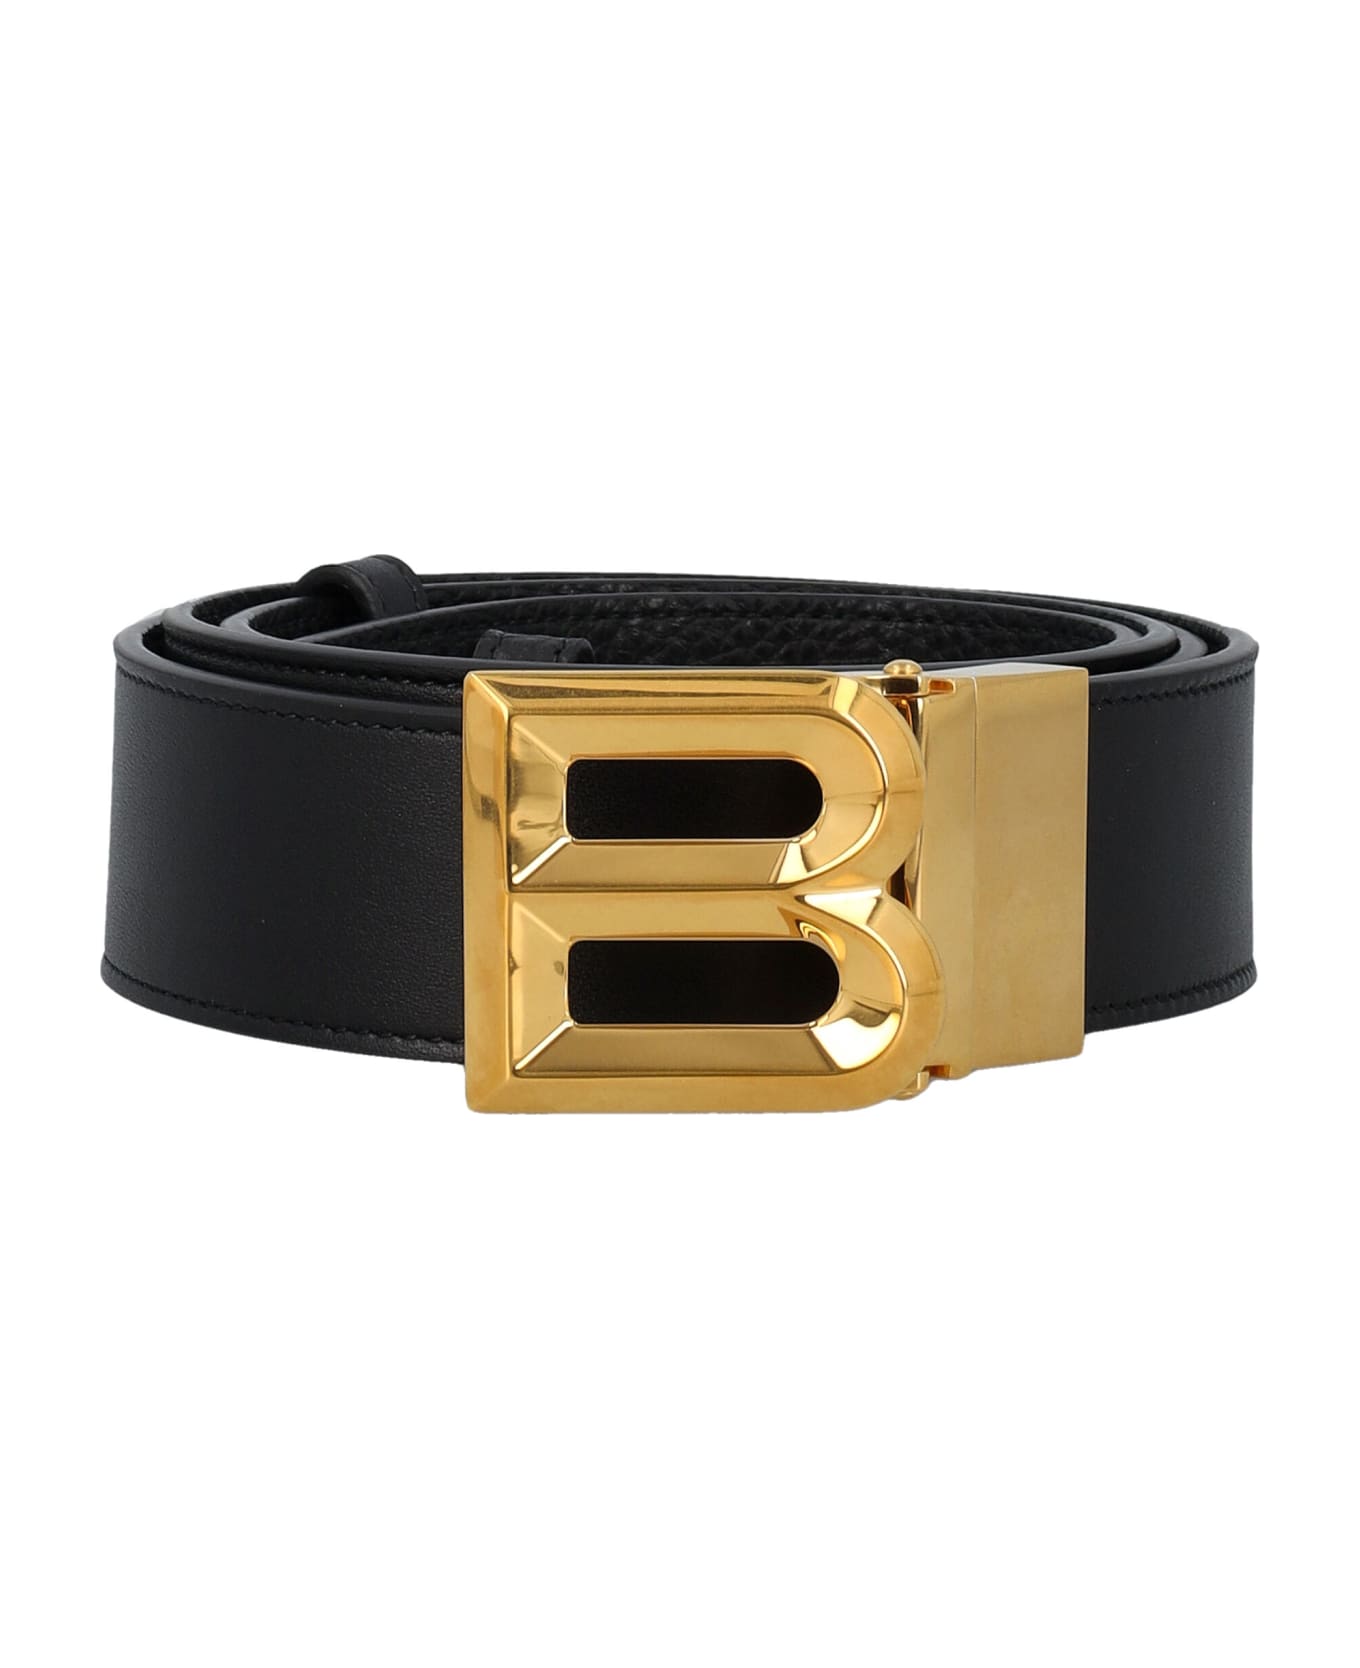 Bally B-bold 35 Belt - BLACK+ORO ベルト